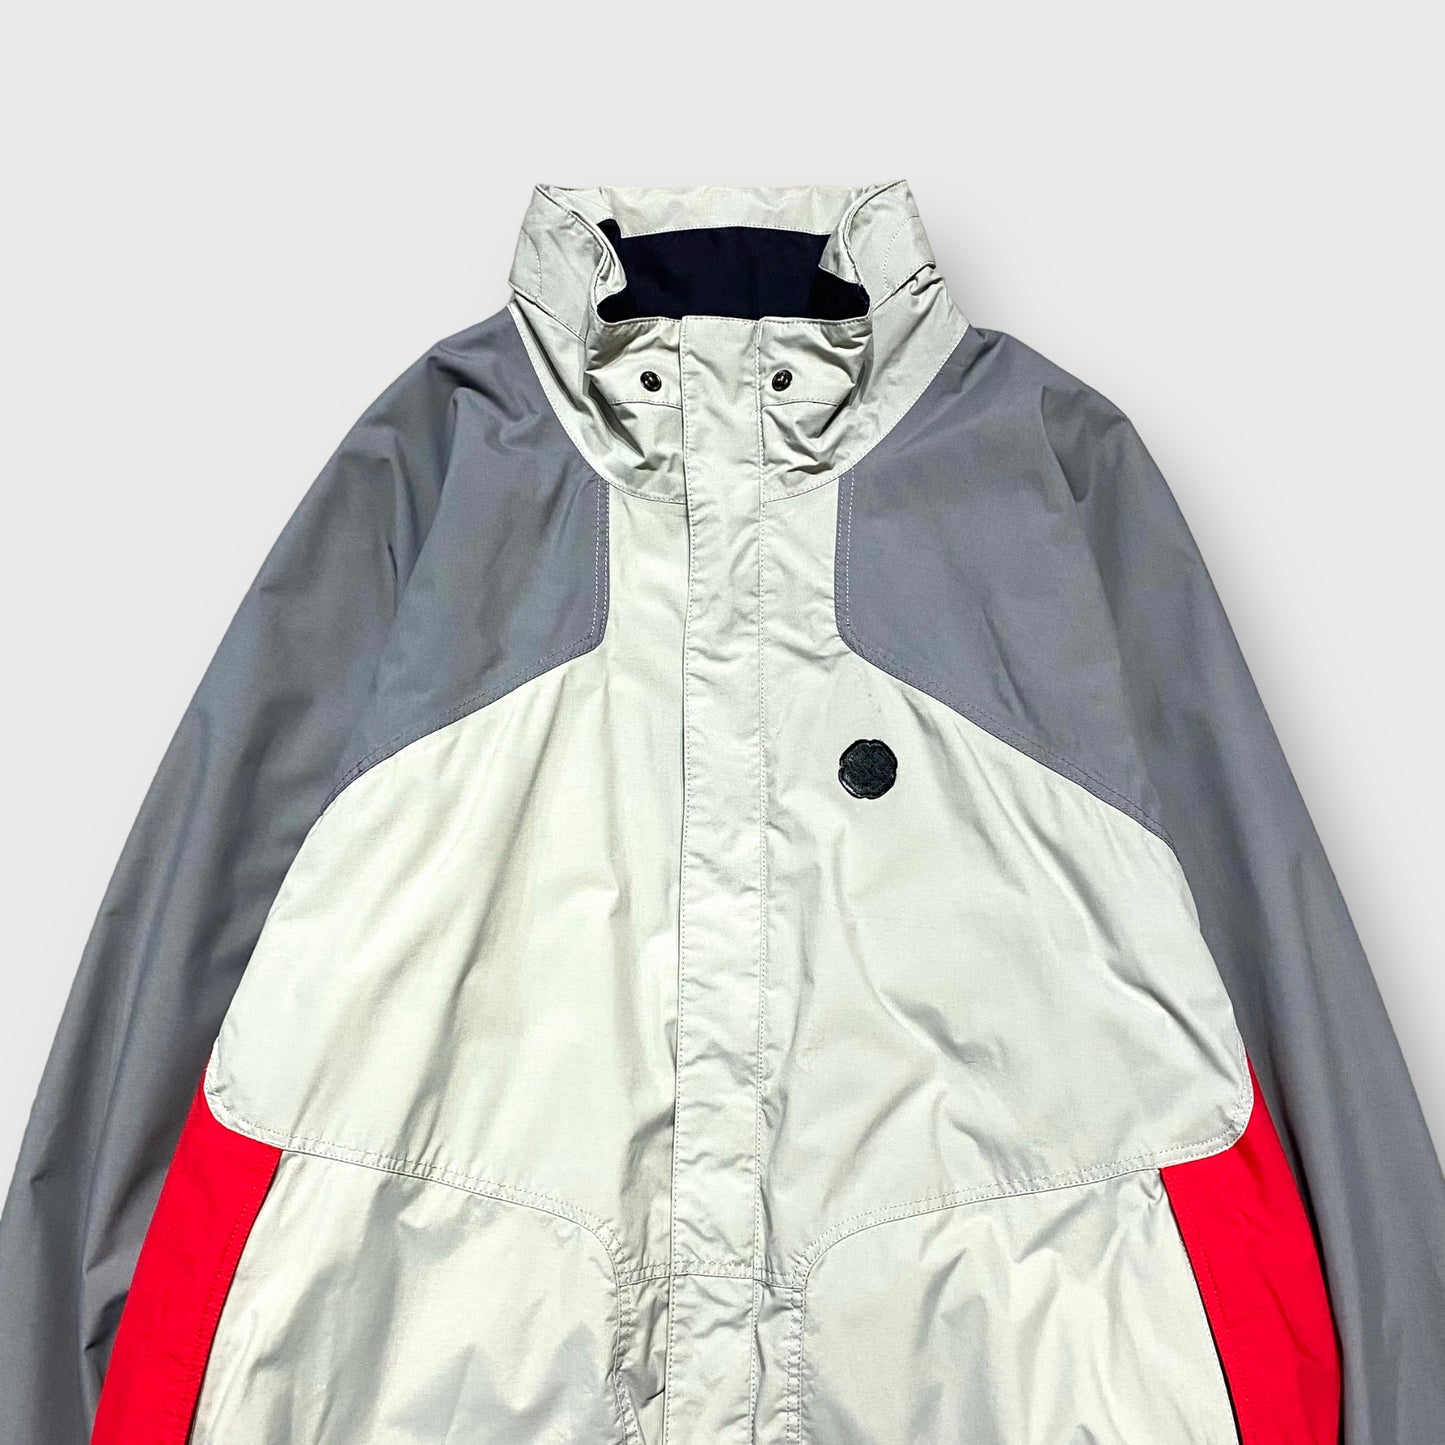 "SPECIAL BLEND" Nylon padded jacket